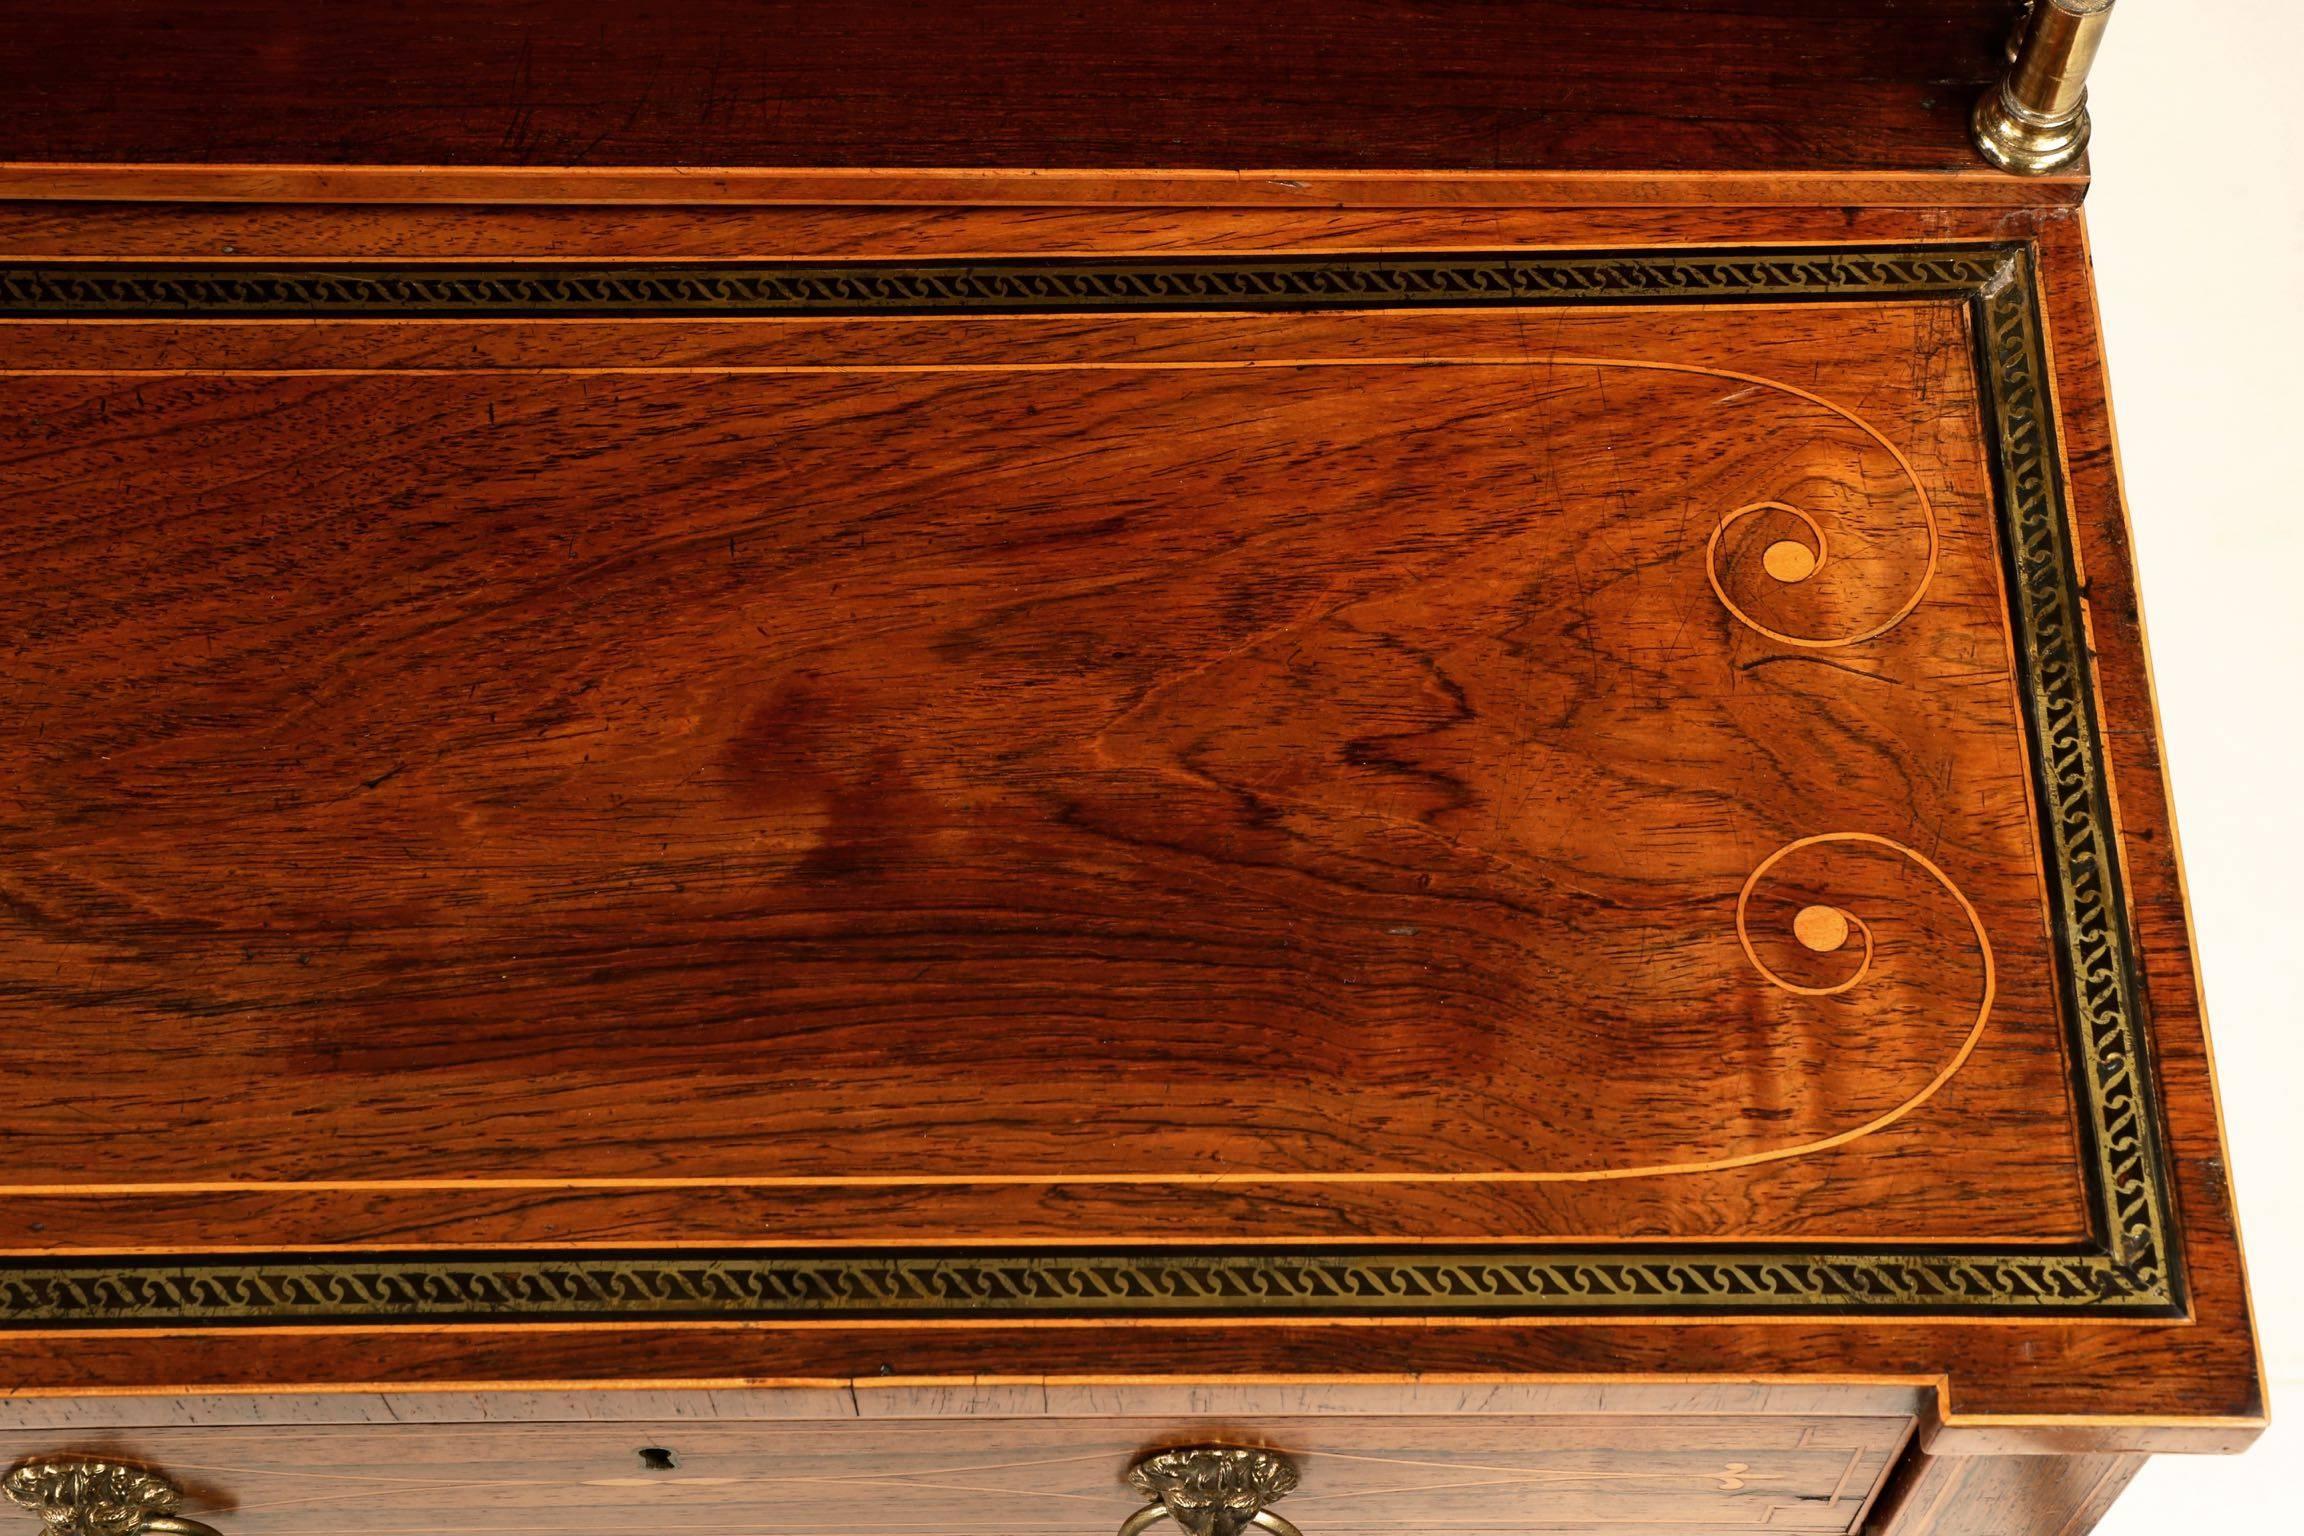 Pine Regency Brass Inlaid Rosewood Chiffonier Cabinet in Manner of John Mclean